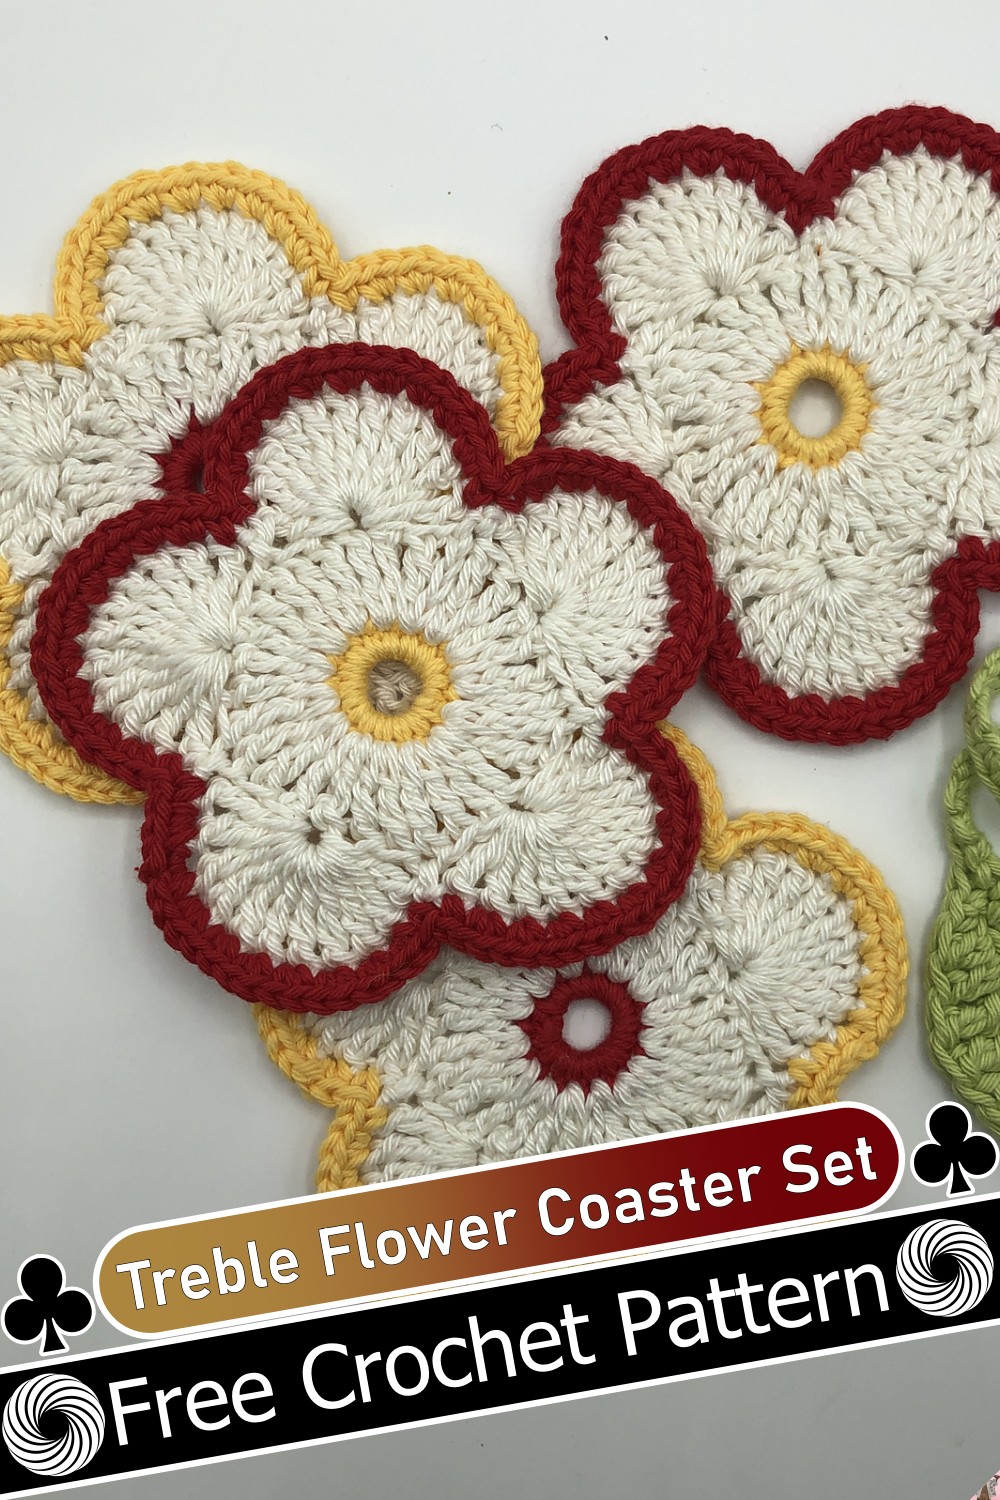 Treble Flower Coaster Set